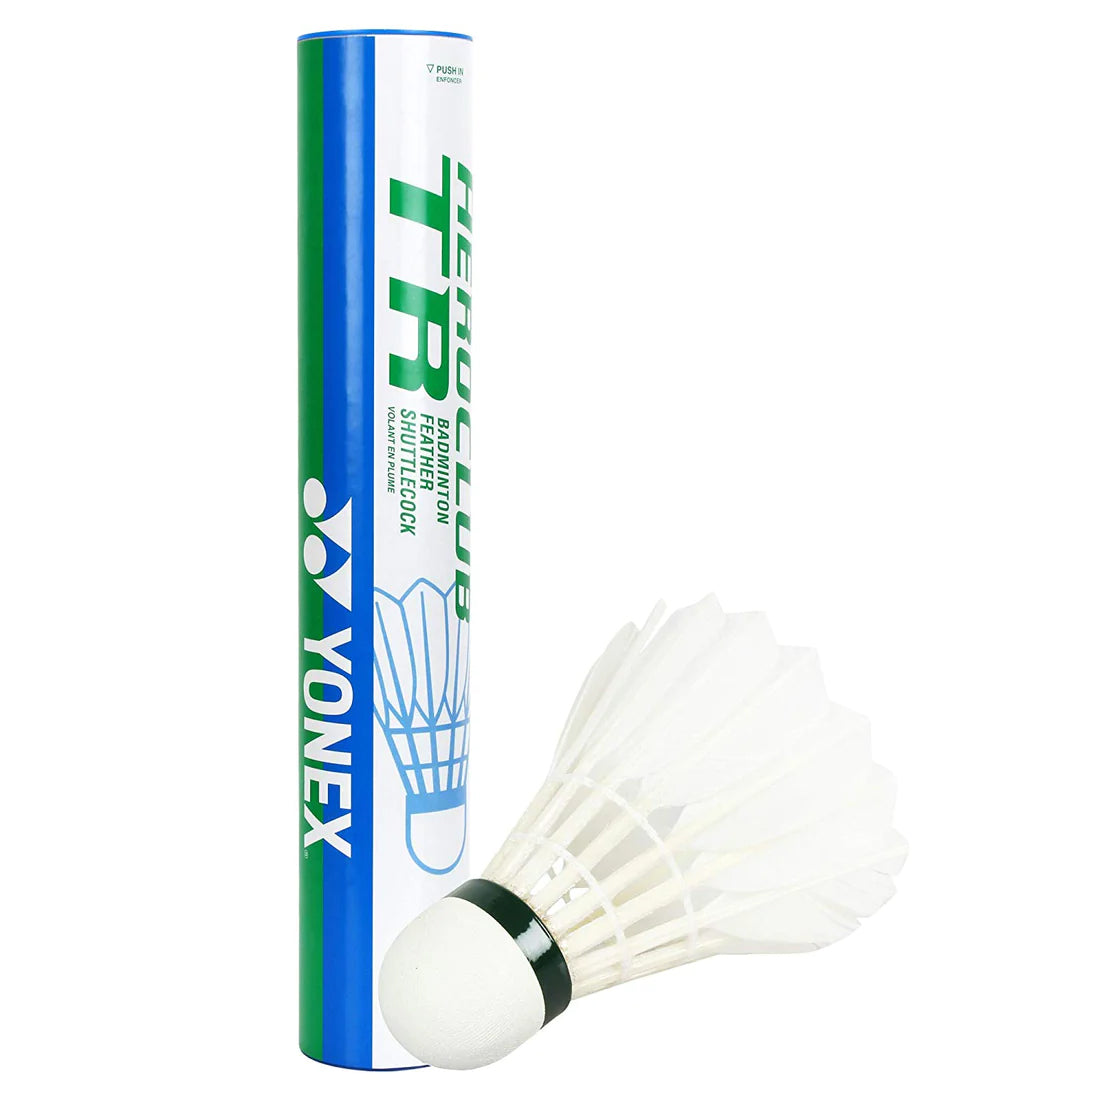 Yonex Aeroclub TR Badminton Feather Shuttlecock, 2 Cans - Best Price online Prokicksports.com